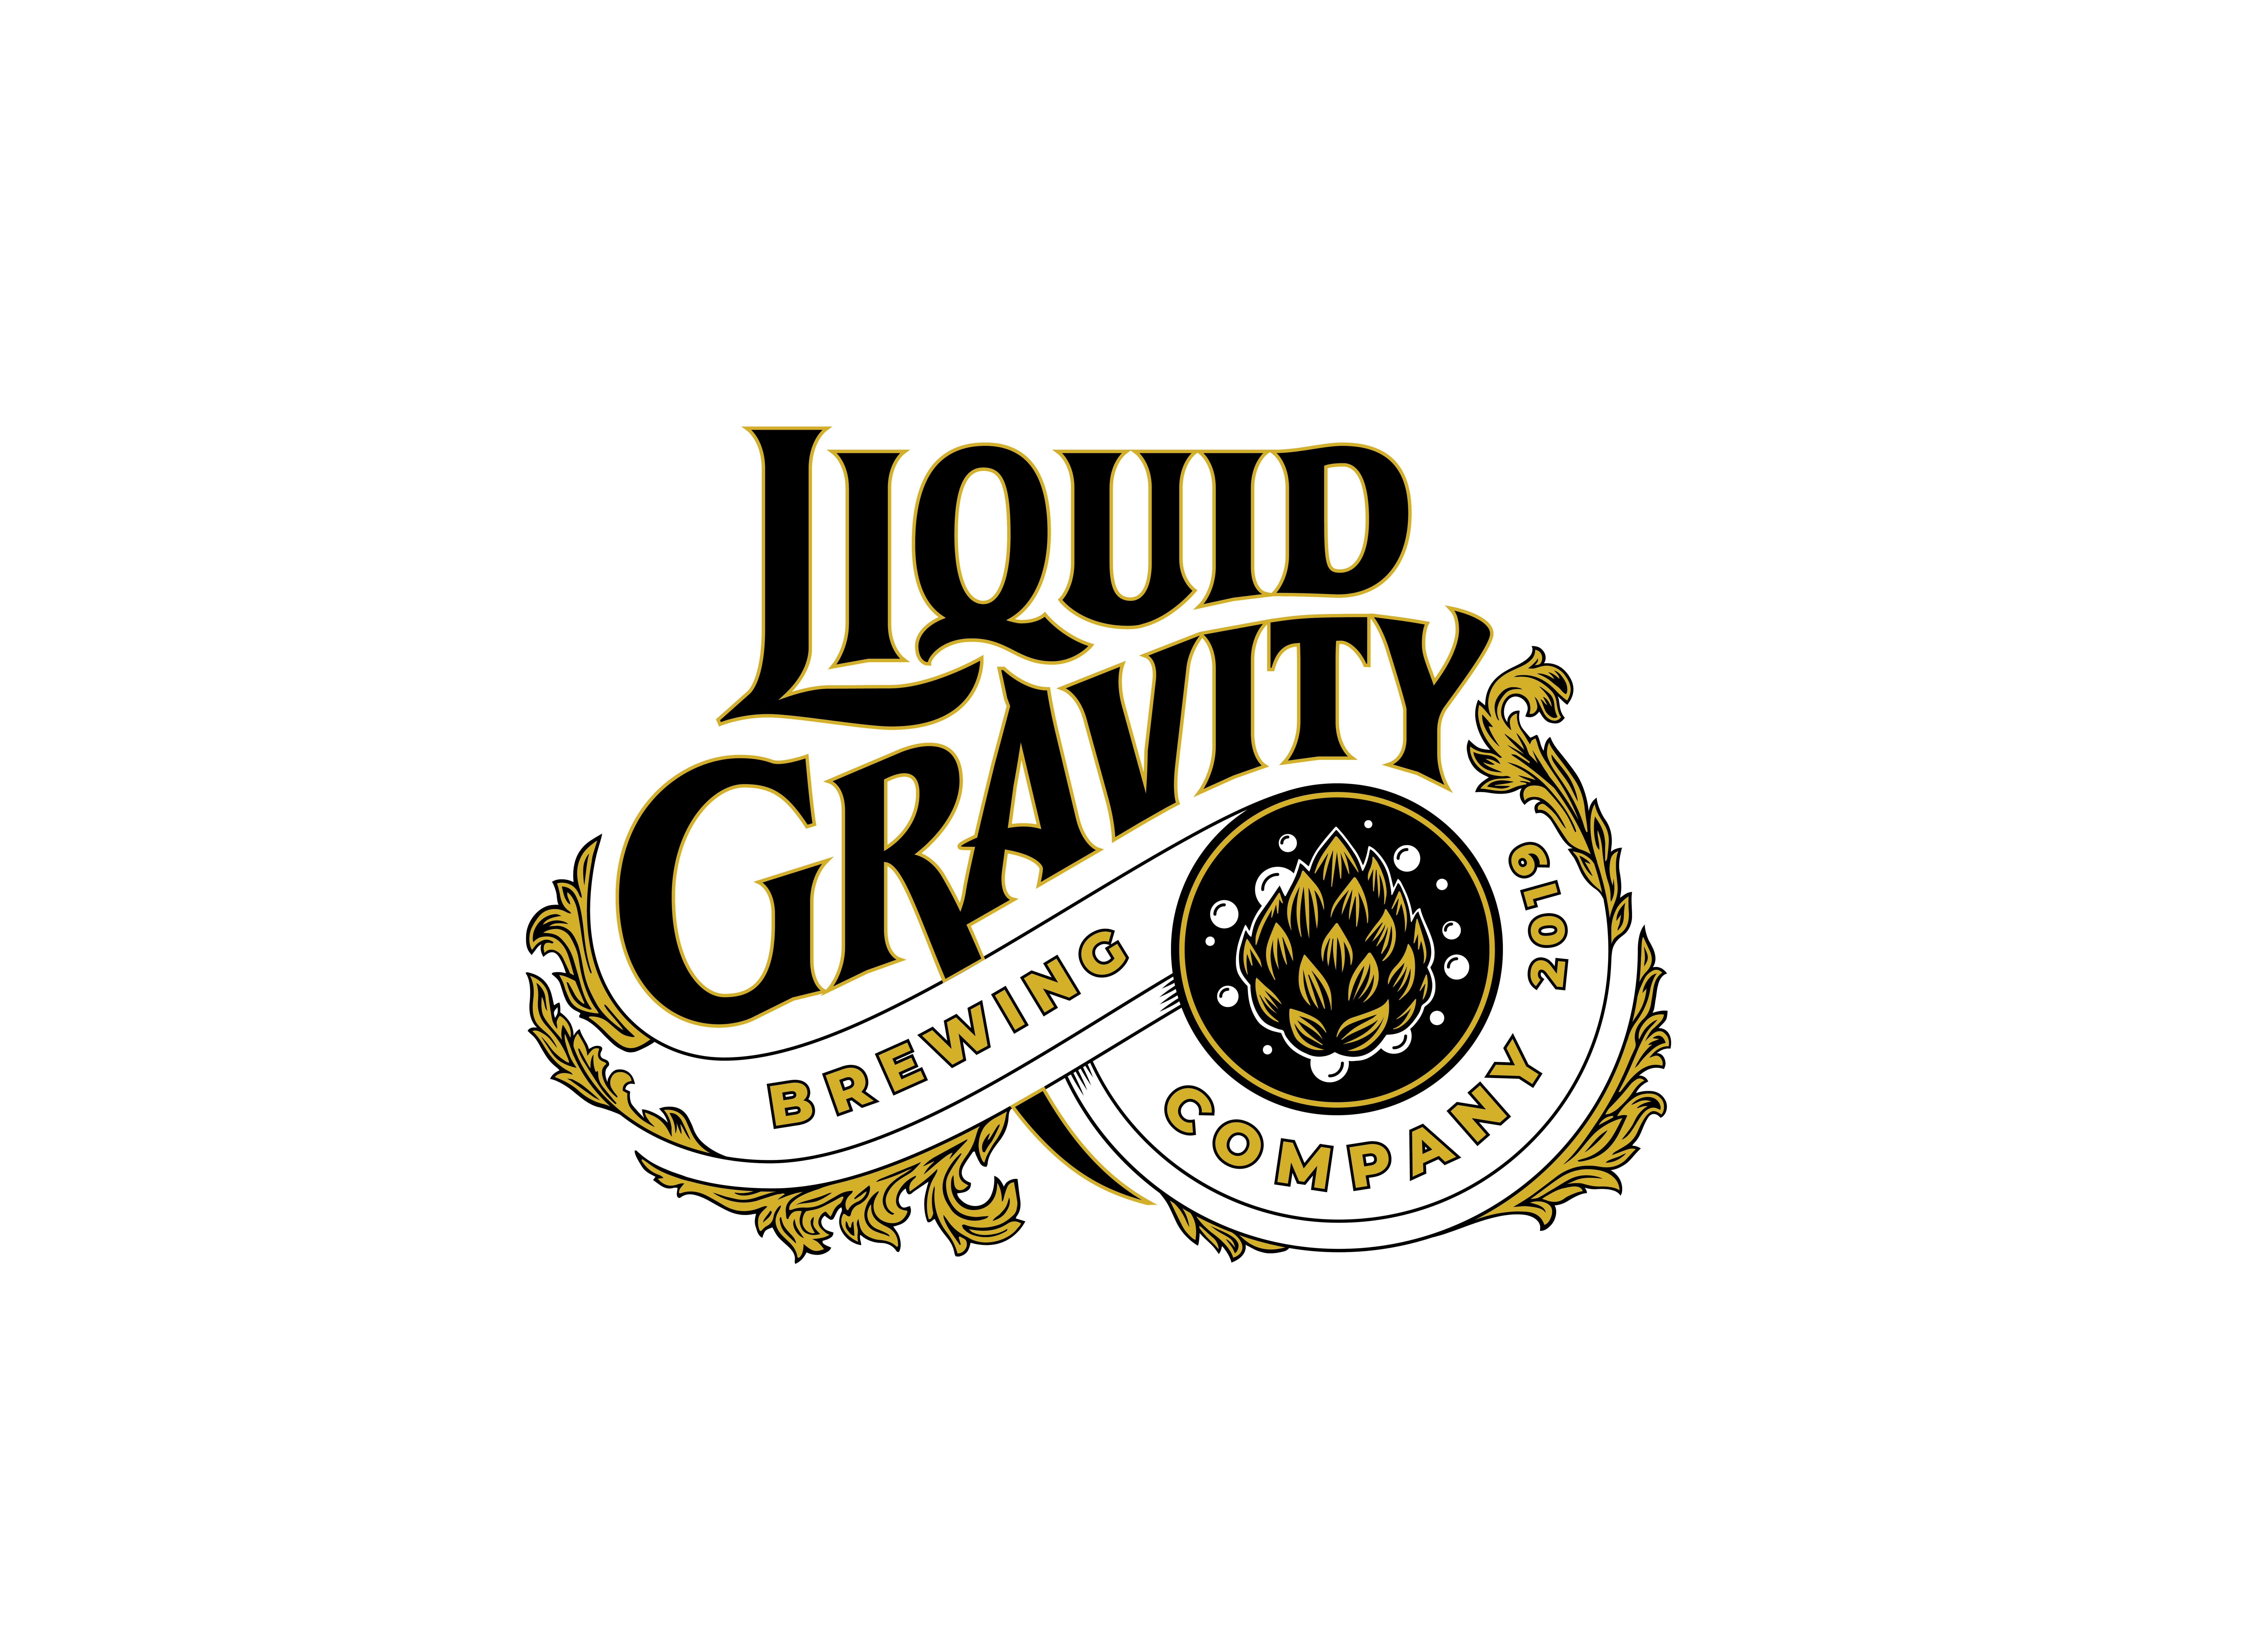 Liquid Gravity Brewing Company